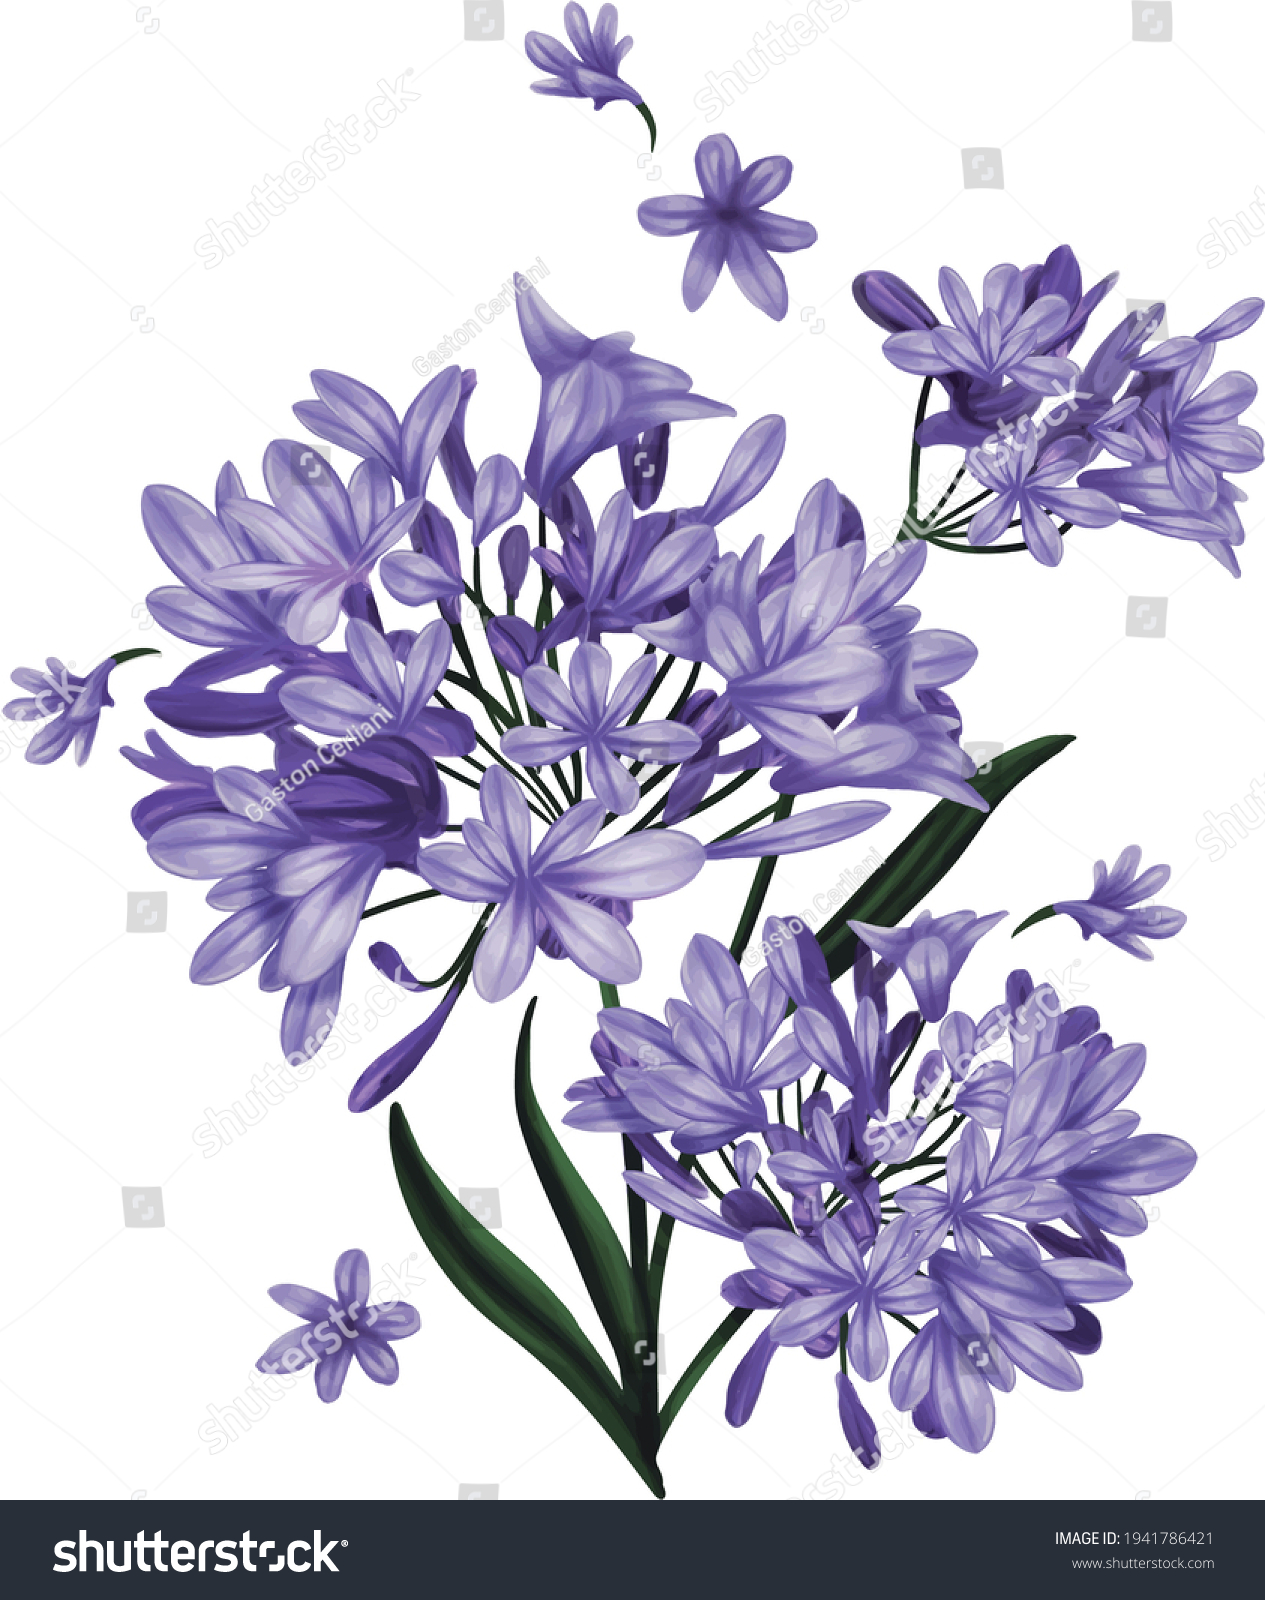 SVG of Violet Agapanthus flowers isolated in white background. Illustration artwork svg